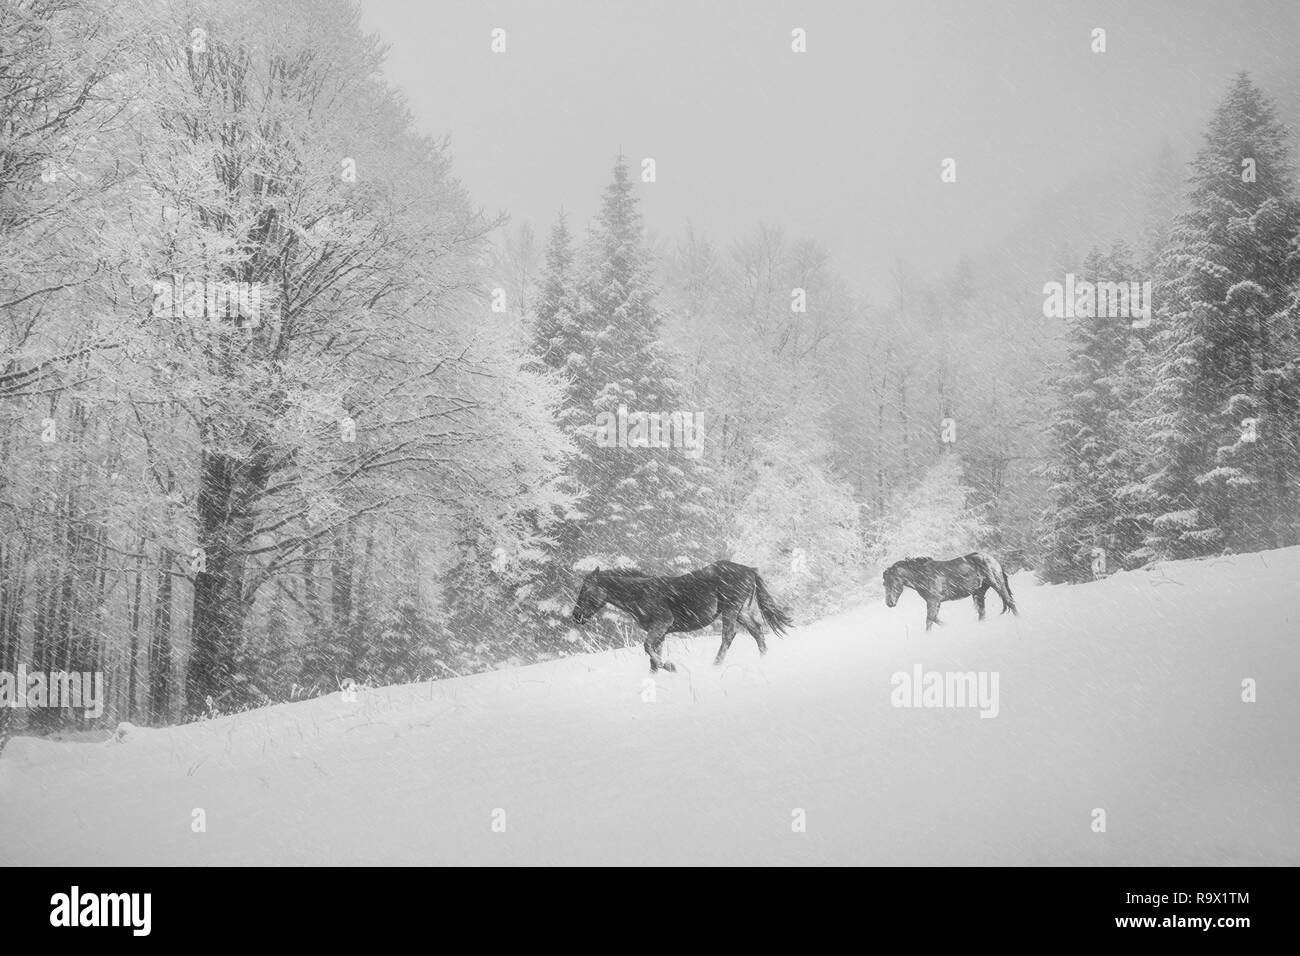 Wild horses in snow storm, Old mountain, Central Balkan wildlife sanctuary, Bulgaria, Europe Stock Photo